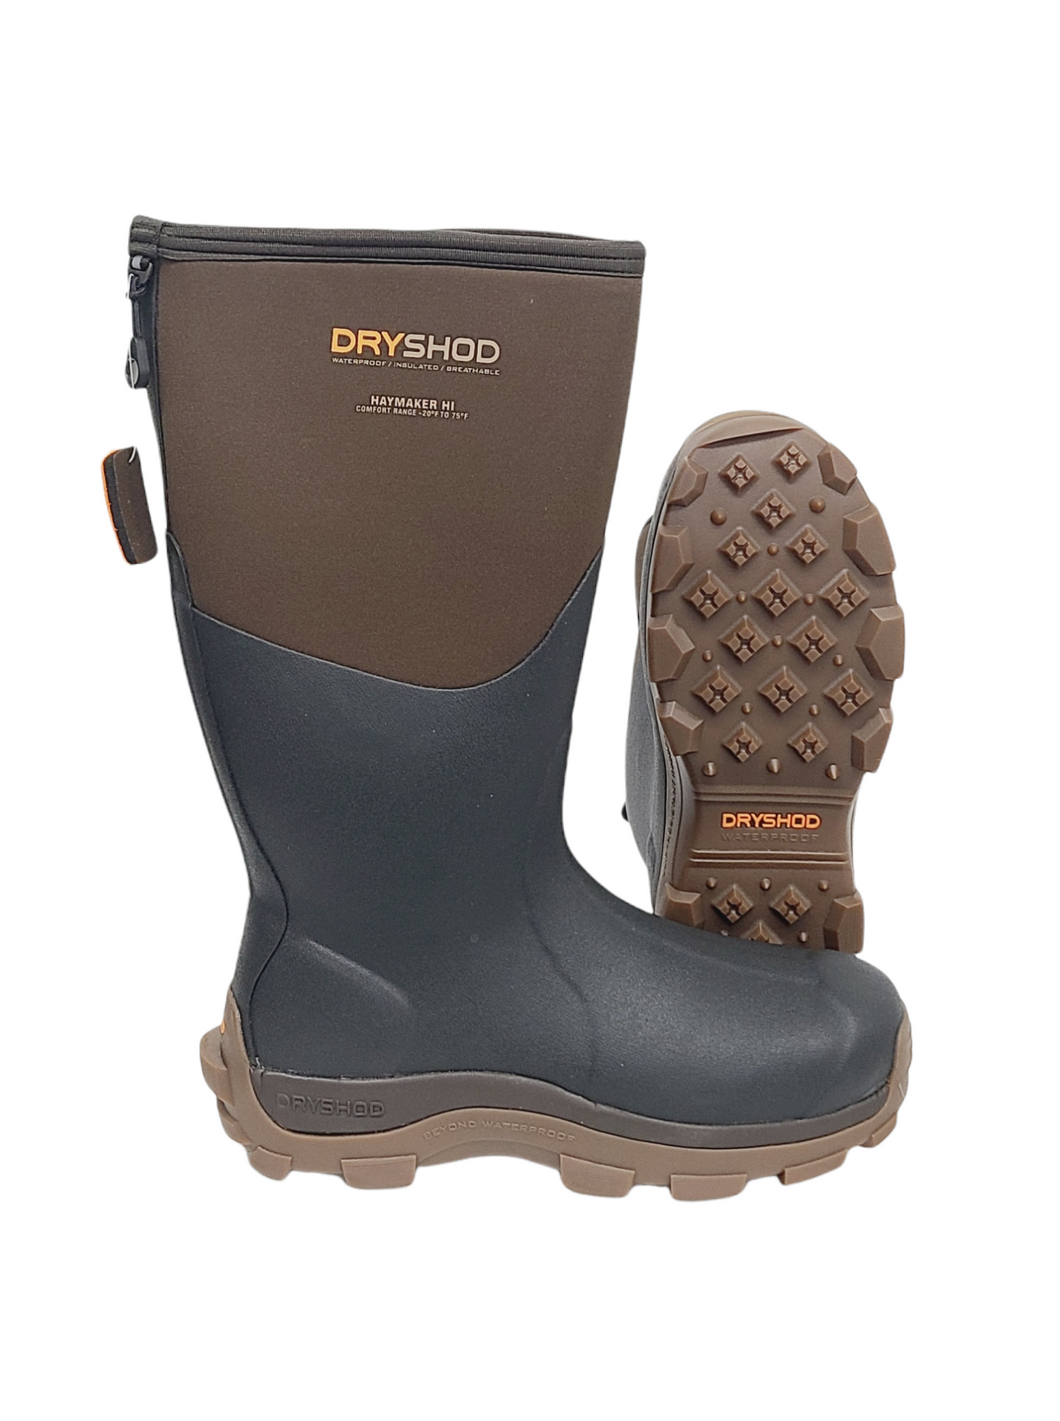 DryShod Haymaker Hi Boot